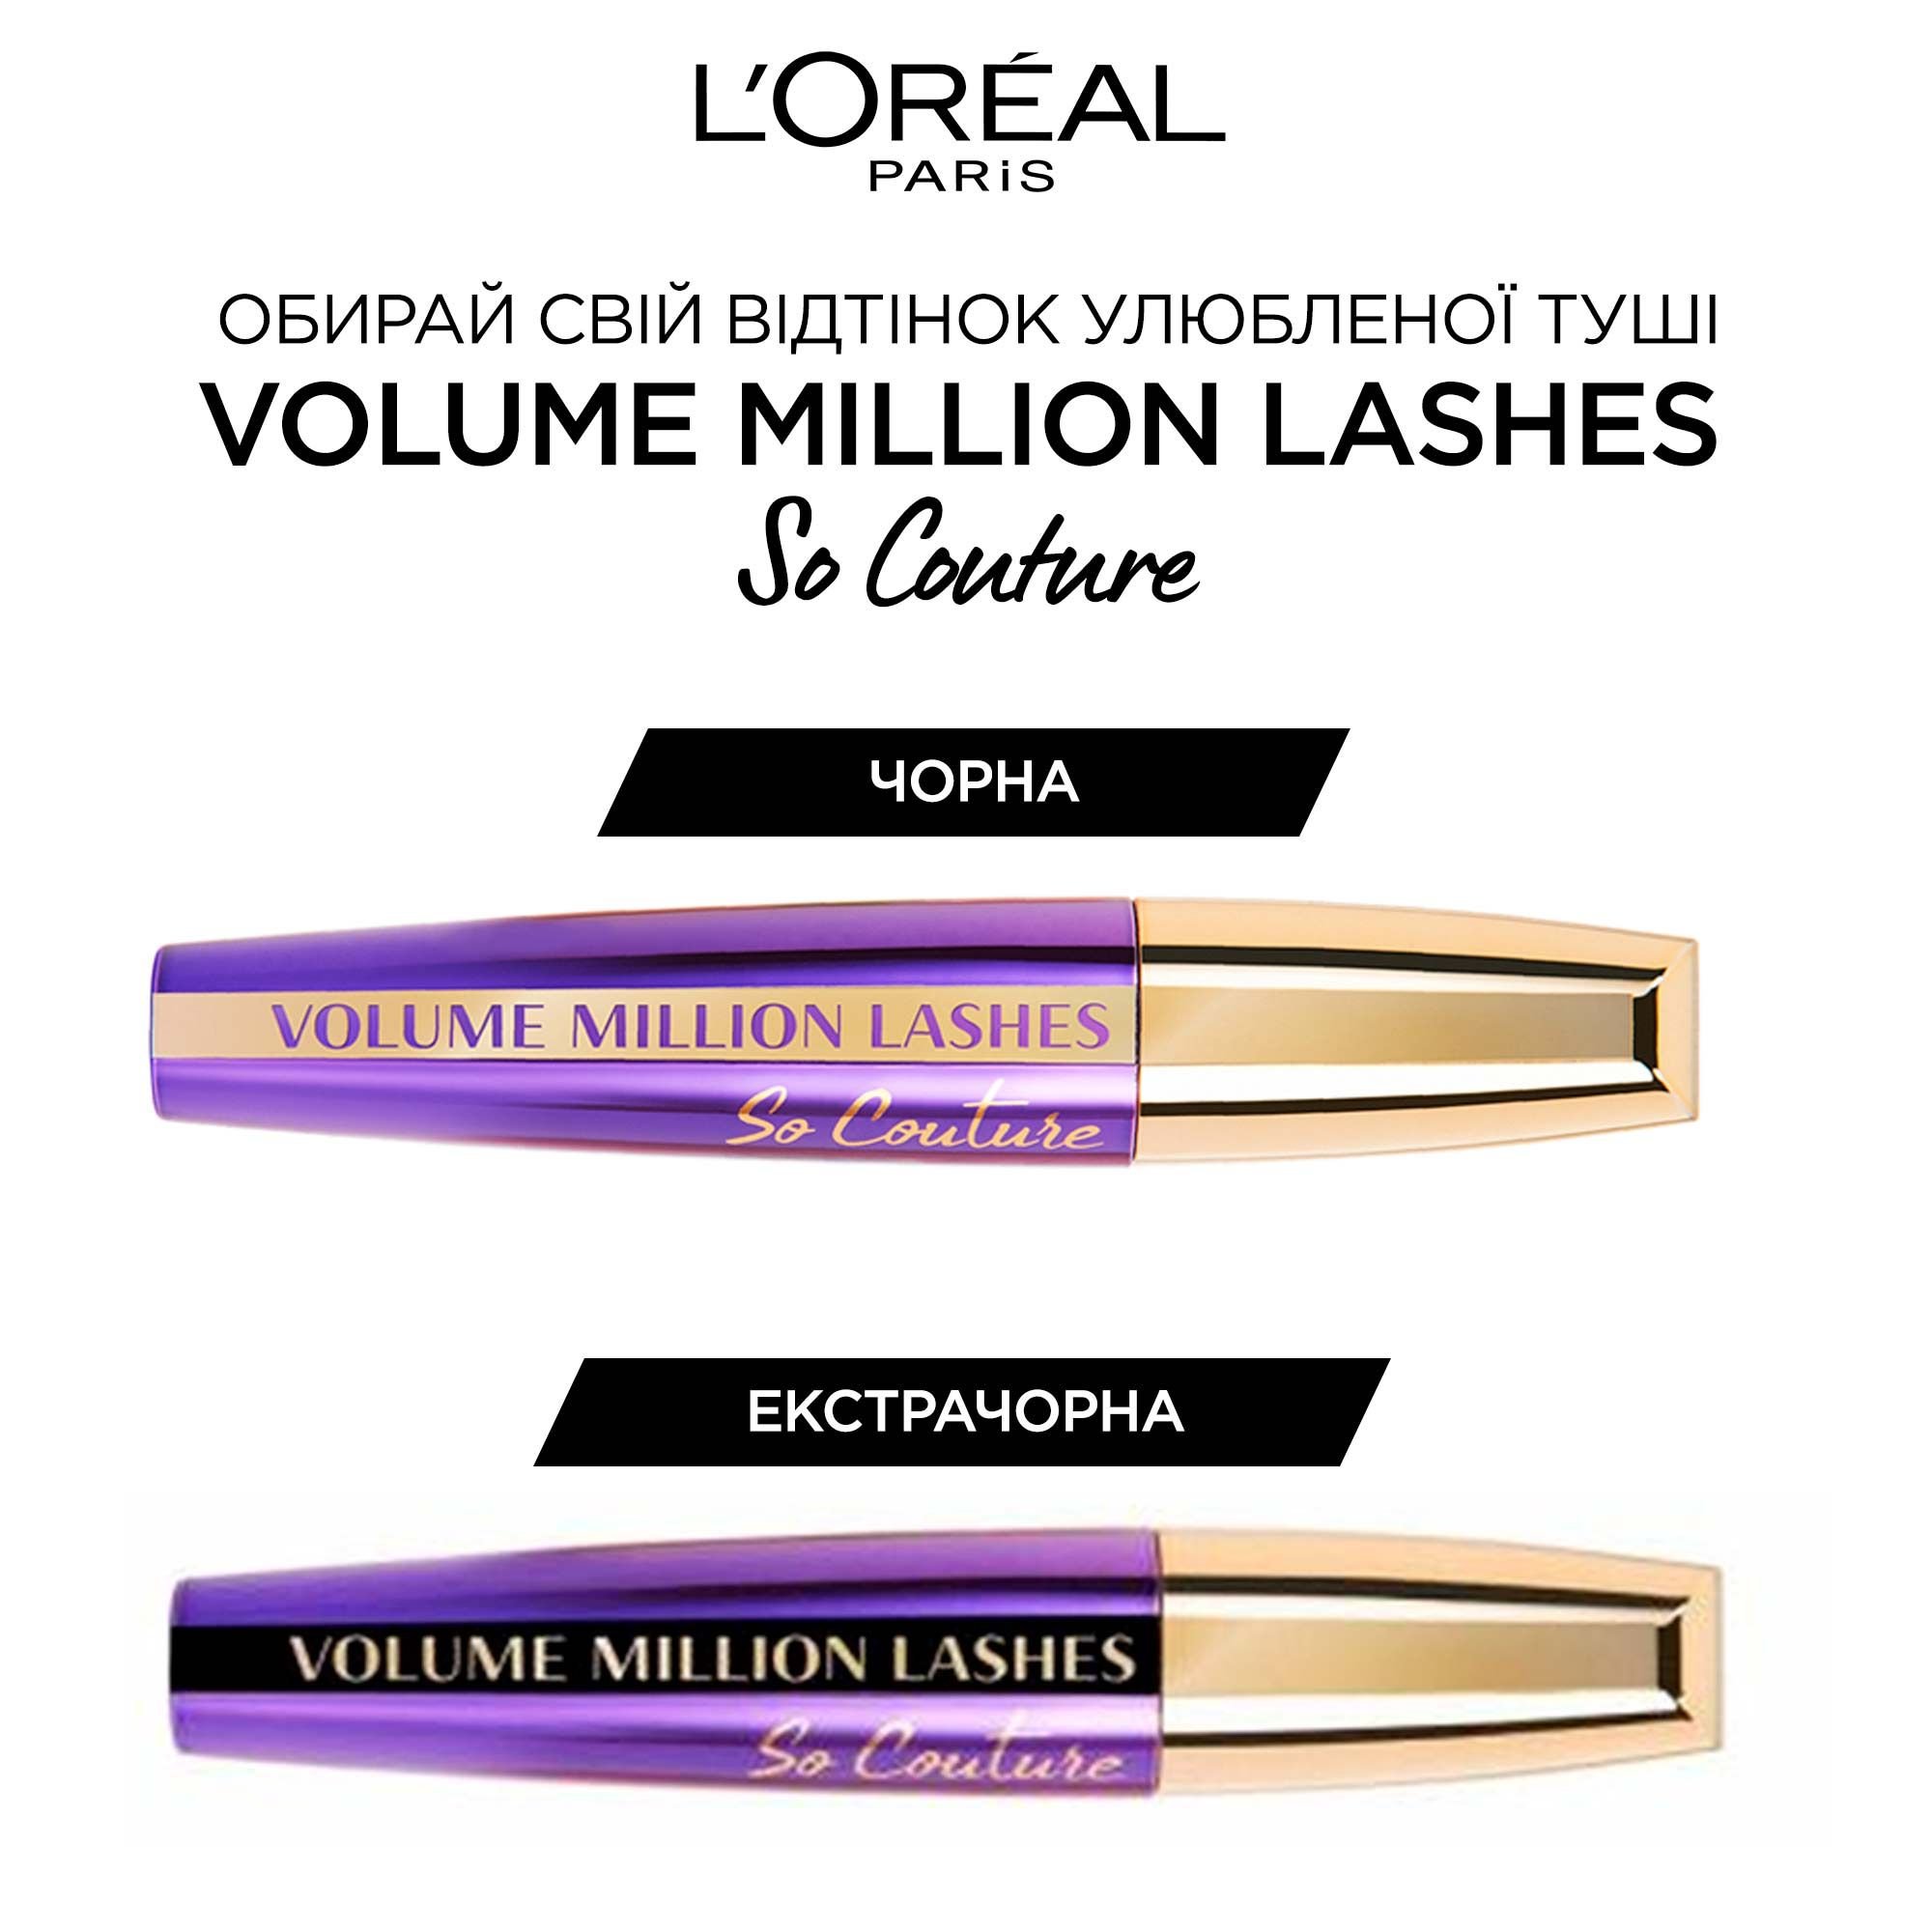 Тушь для ресниц L’Oréal Paris Volume Million Lashes So Couture, тон Черный, 9 мл (A8043400) - фото 4